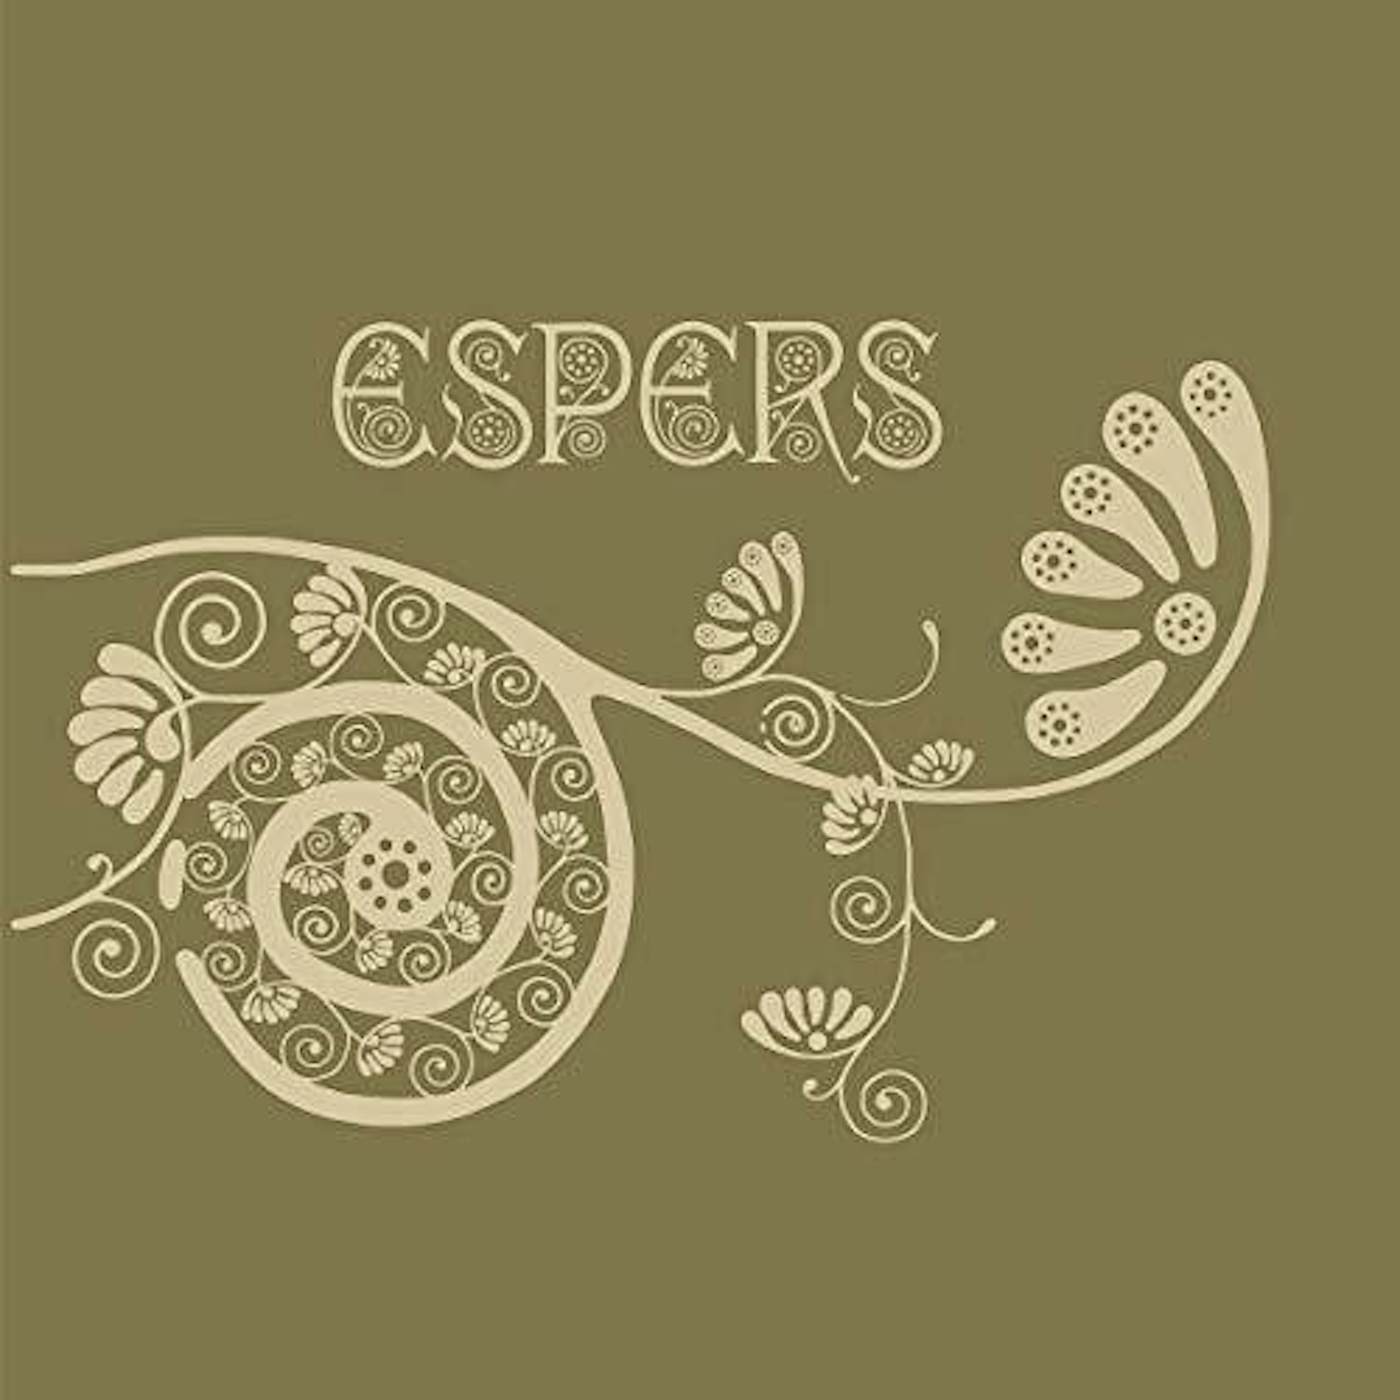 Espers Vinyl Record